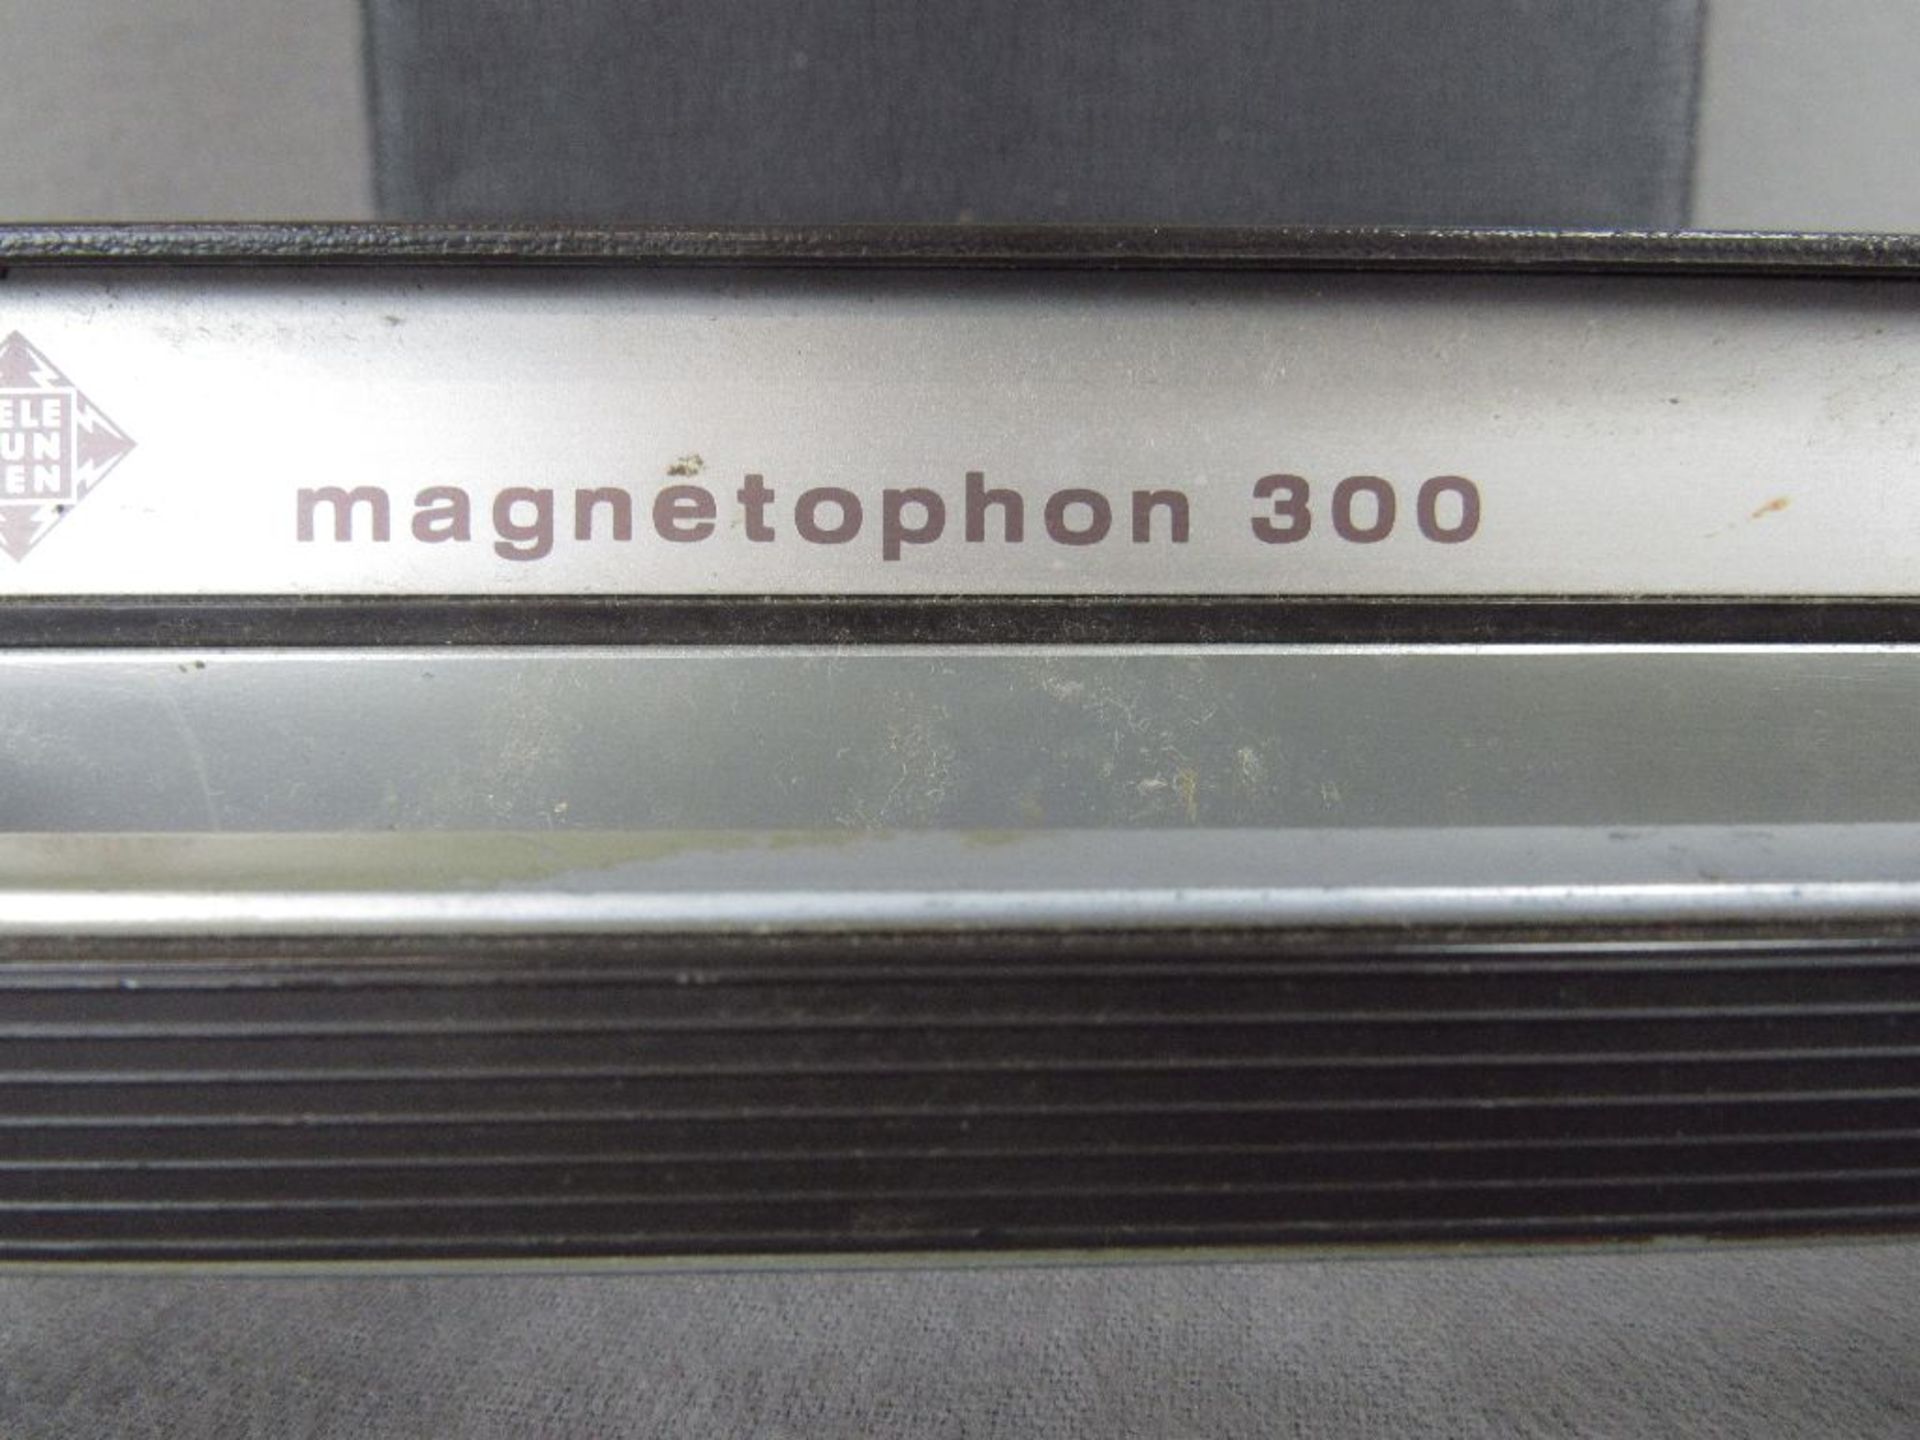 Vintage 70er Jahre mobiles Telefunken Tonbandgerät Magnetofon 300 - Bild 5 aus 6